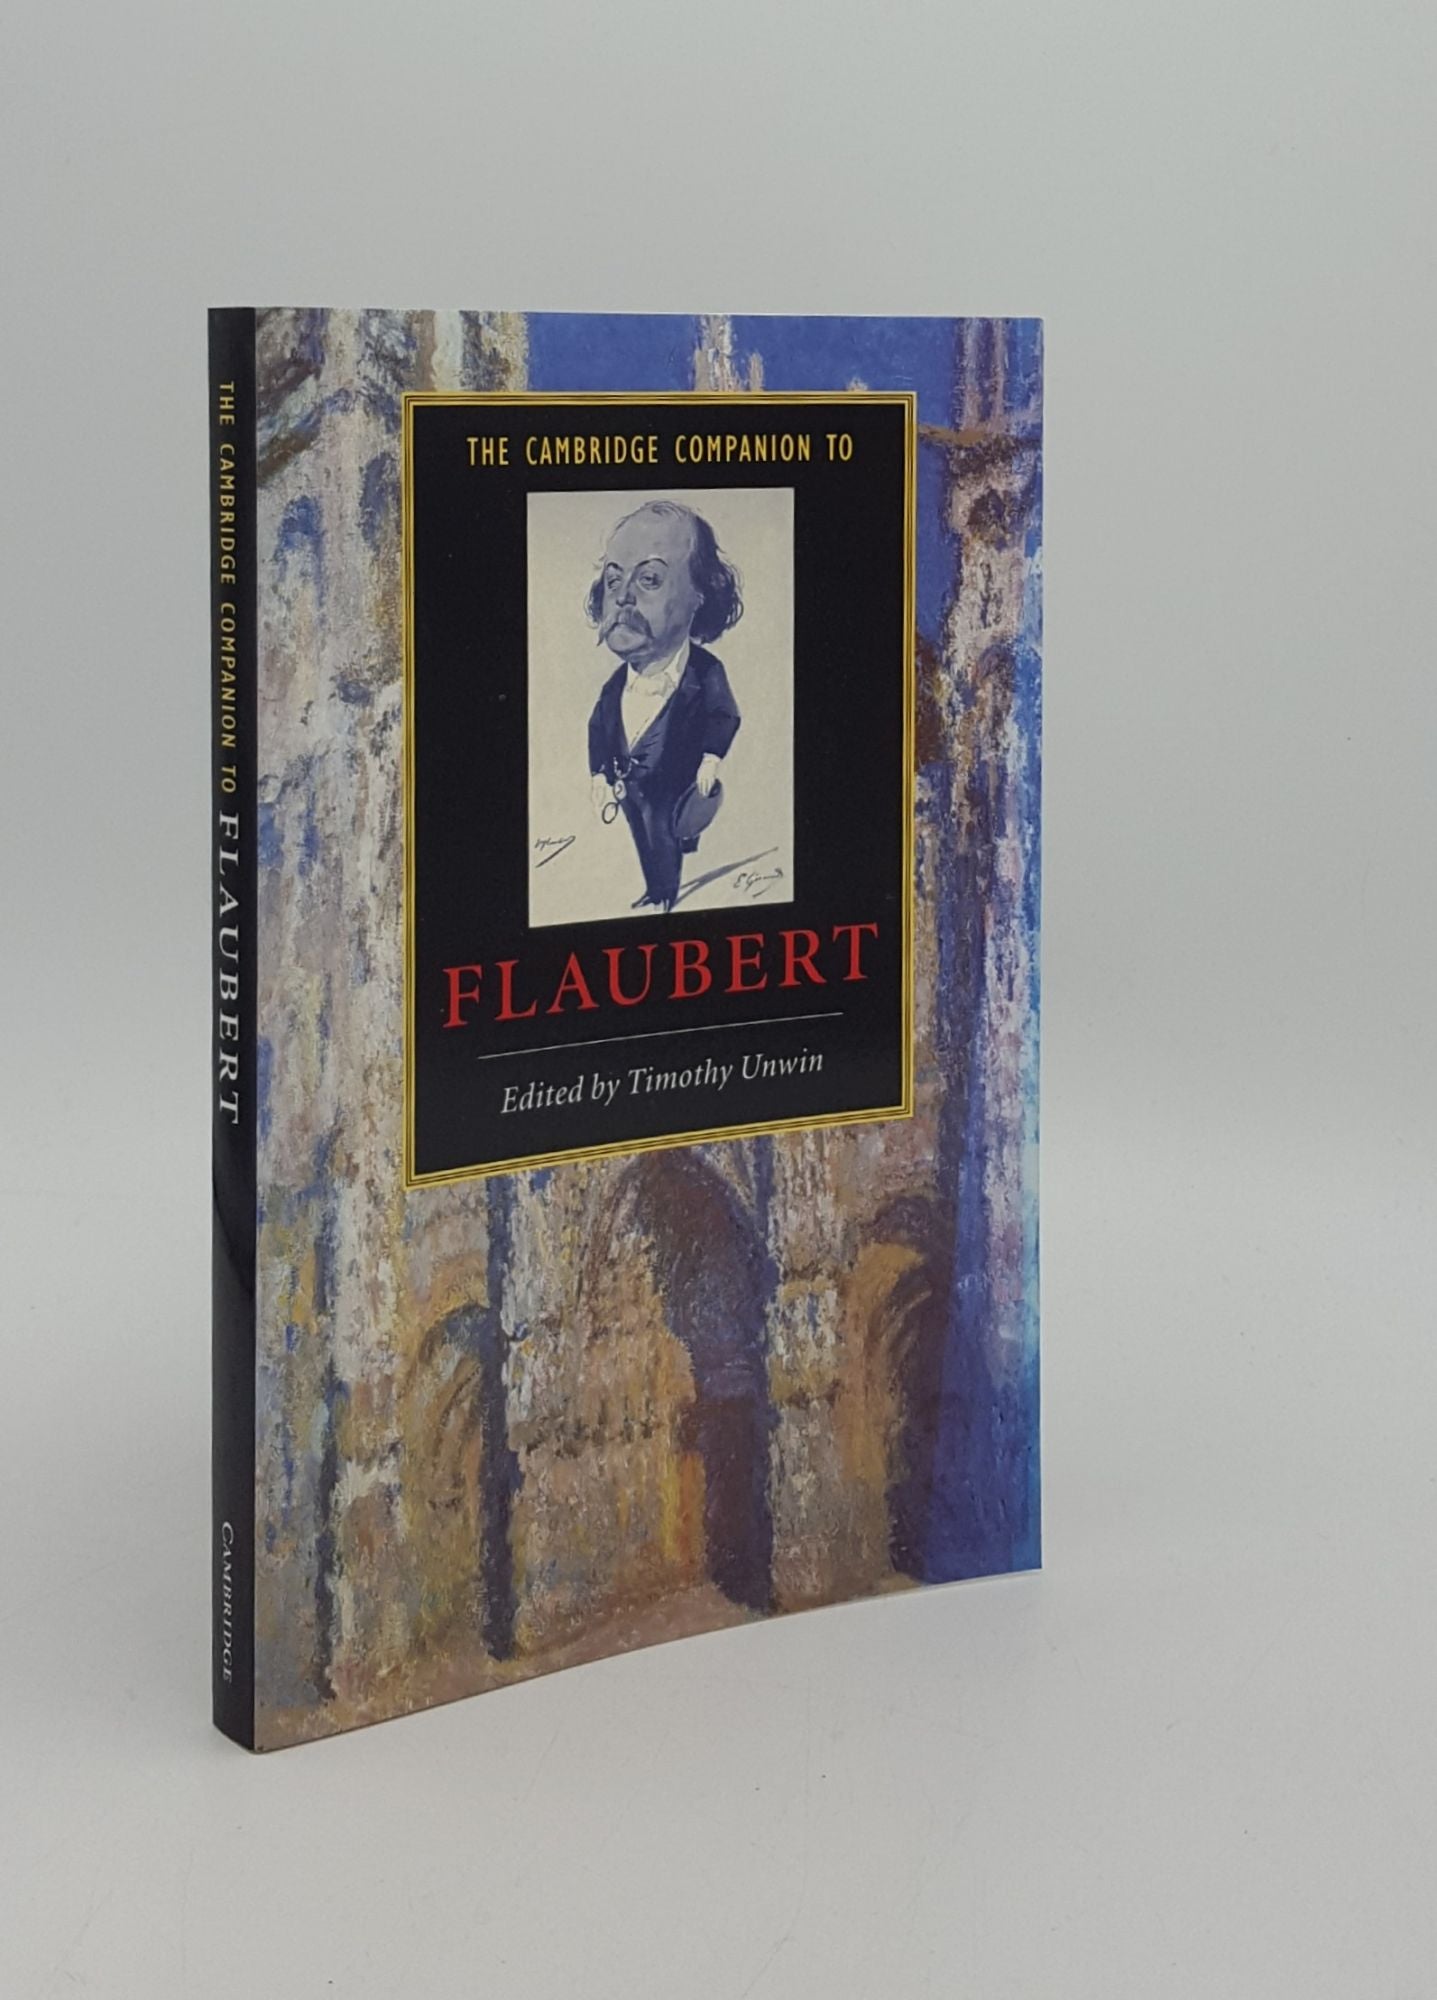 UNWIN Timothy - The Cambridge Companion to Flaubert (Cambridge Companions to Literature)